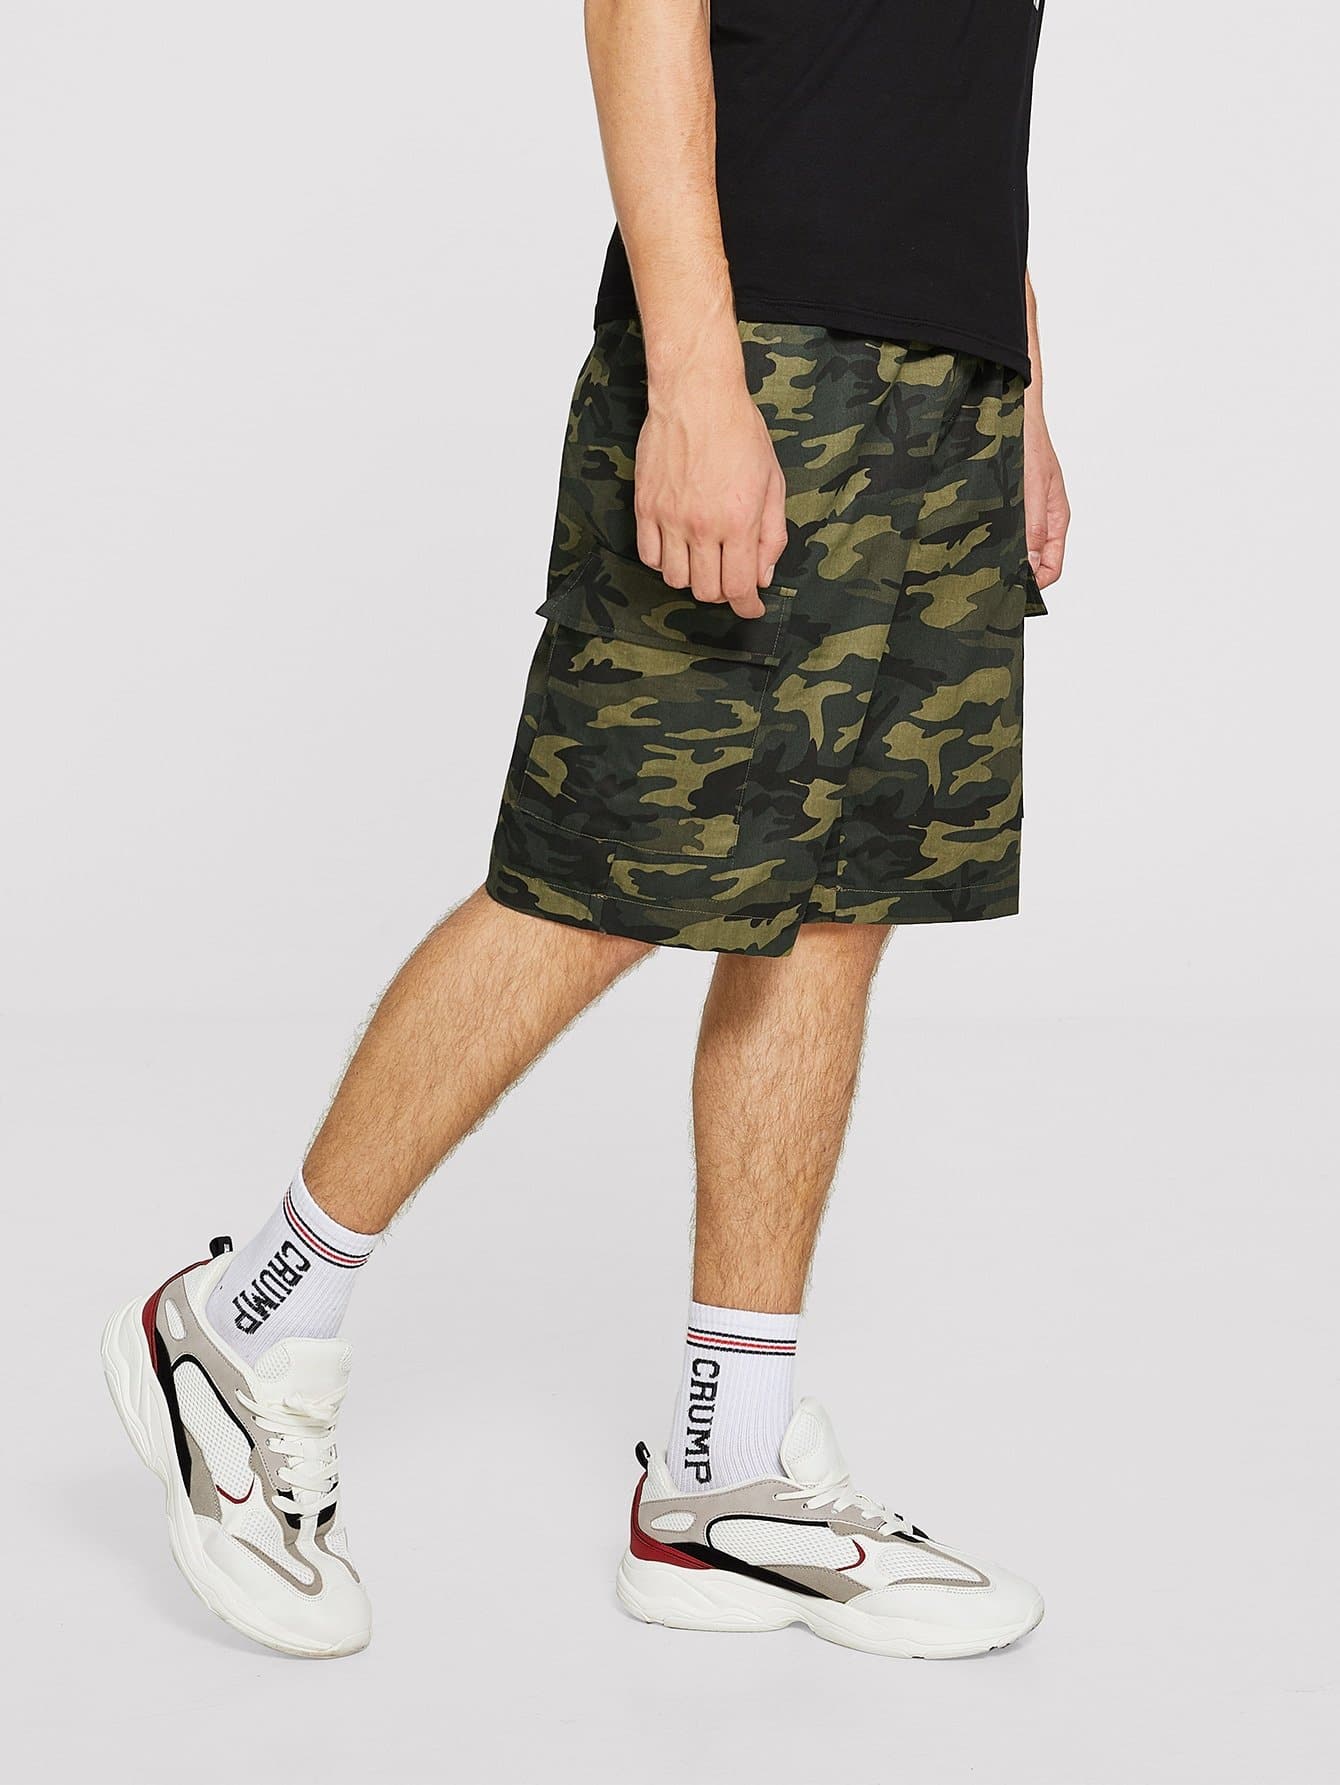 100% Cotton Drawstring Waist Multi-pocket Camouflage Shorts